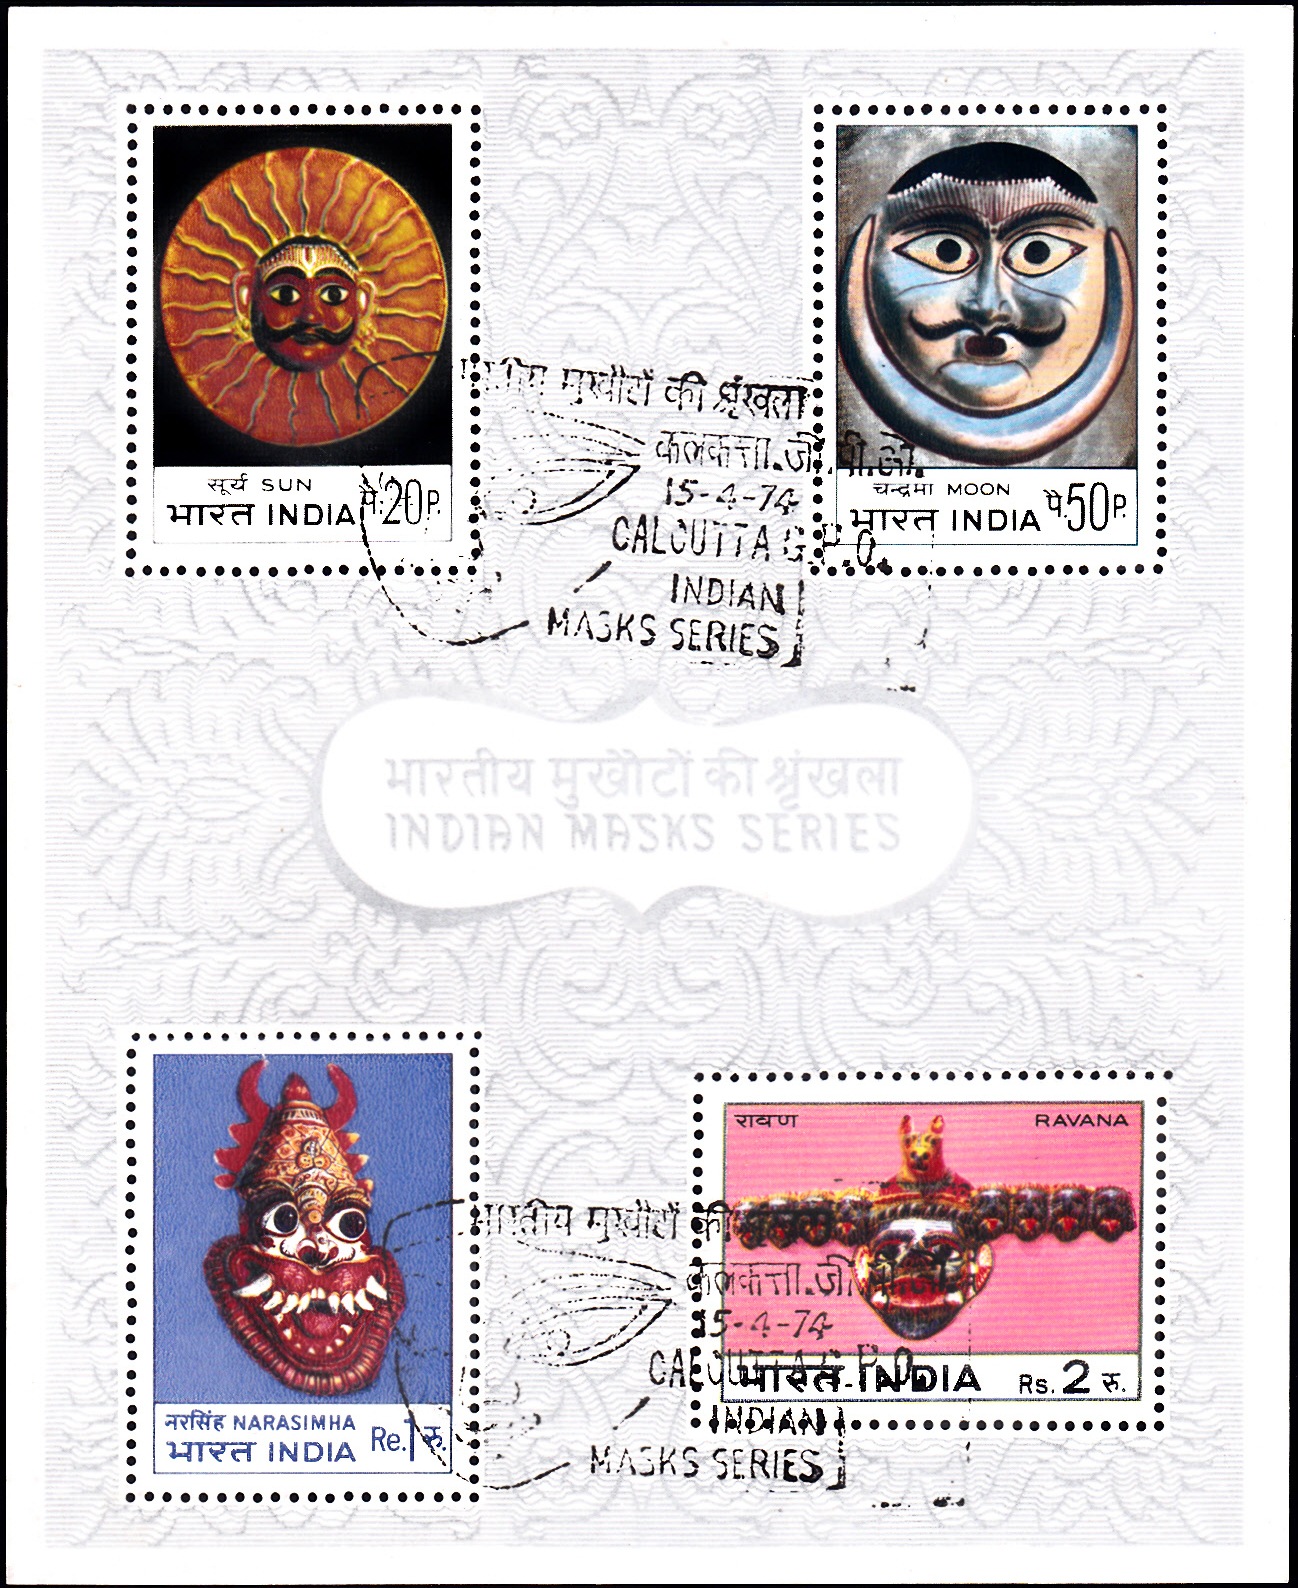  Indian Masks Series 1974